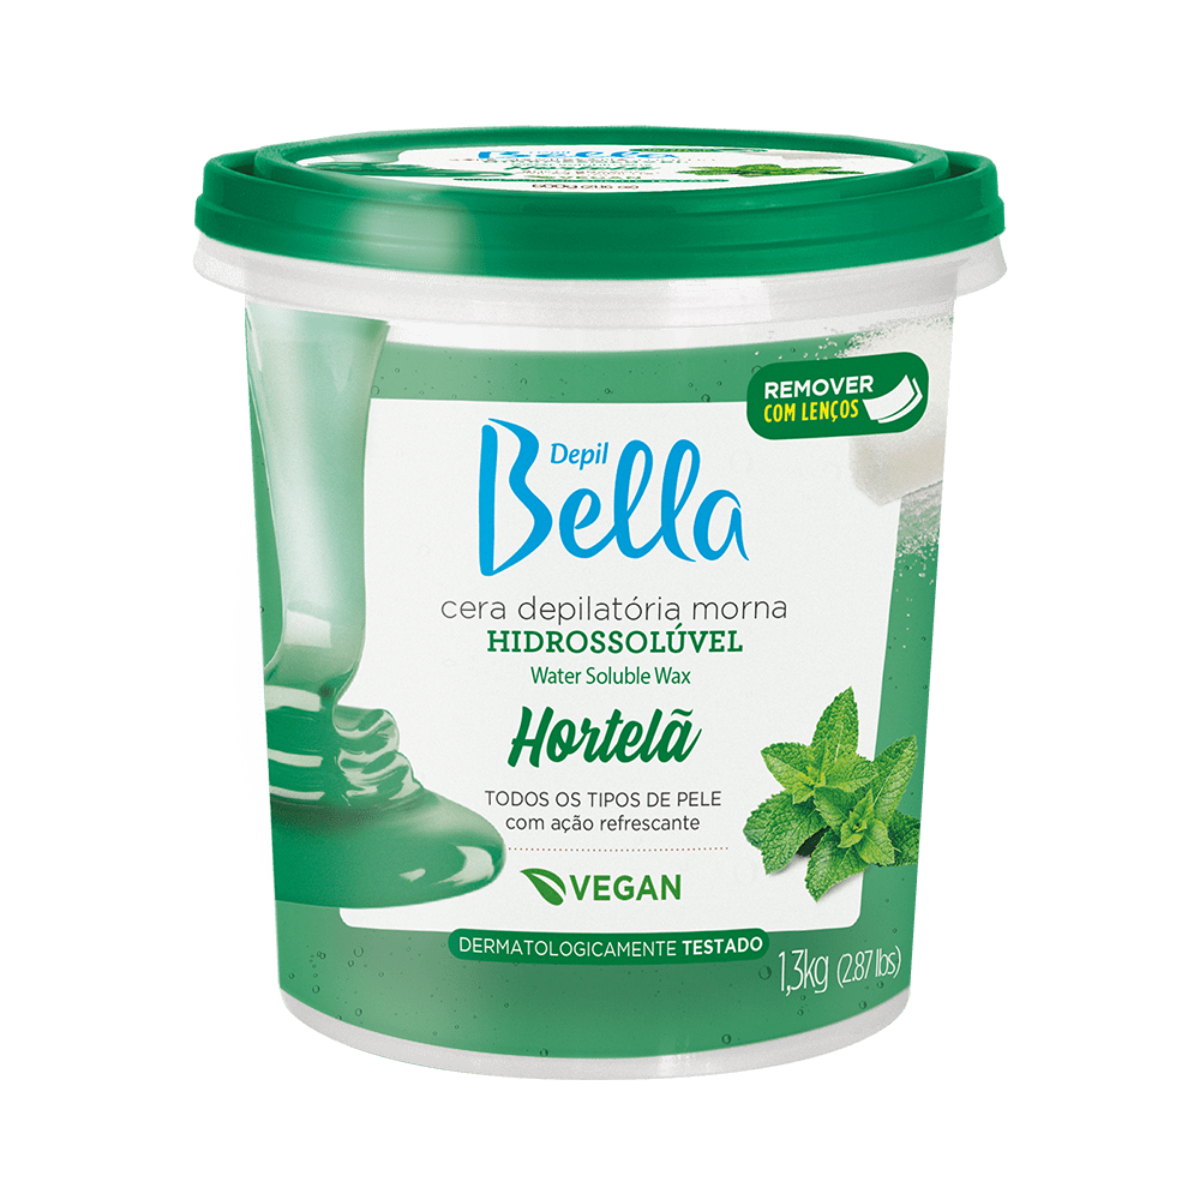 Depil Bella Full Body Sugar Wax Mint, Depiladora 1300g - depilcompany